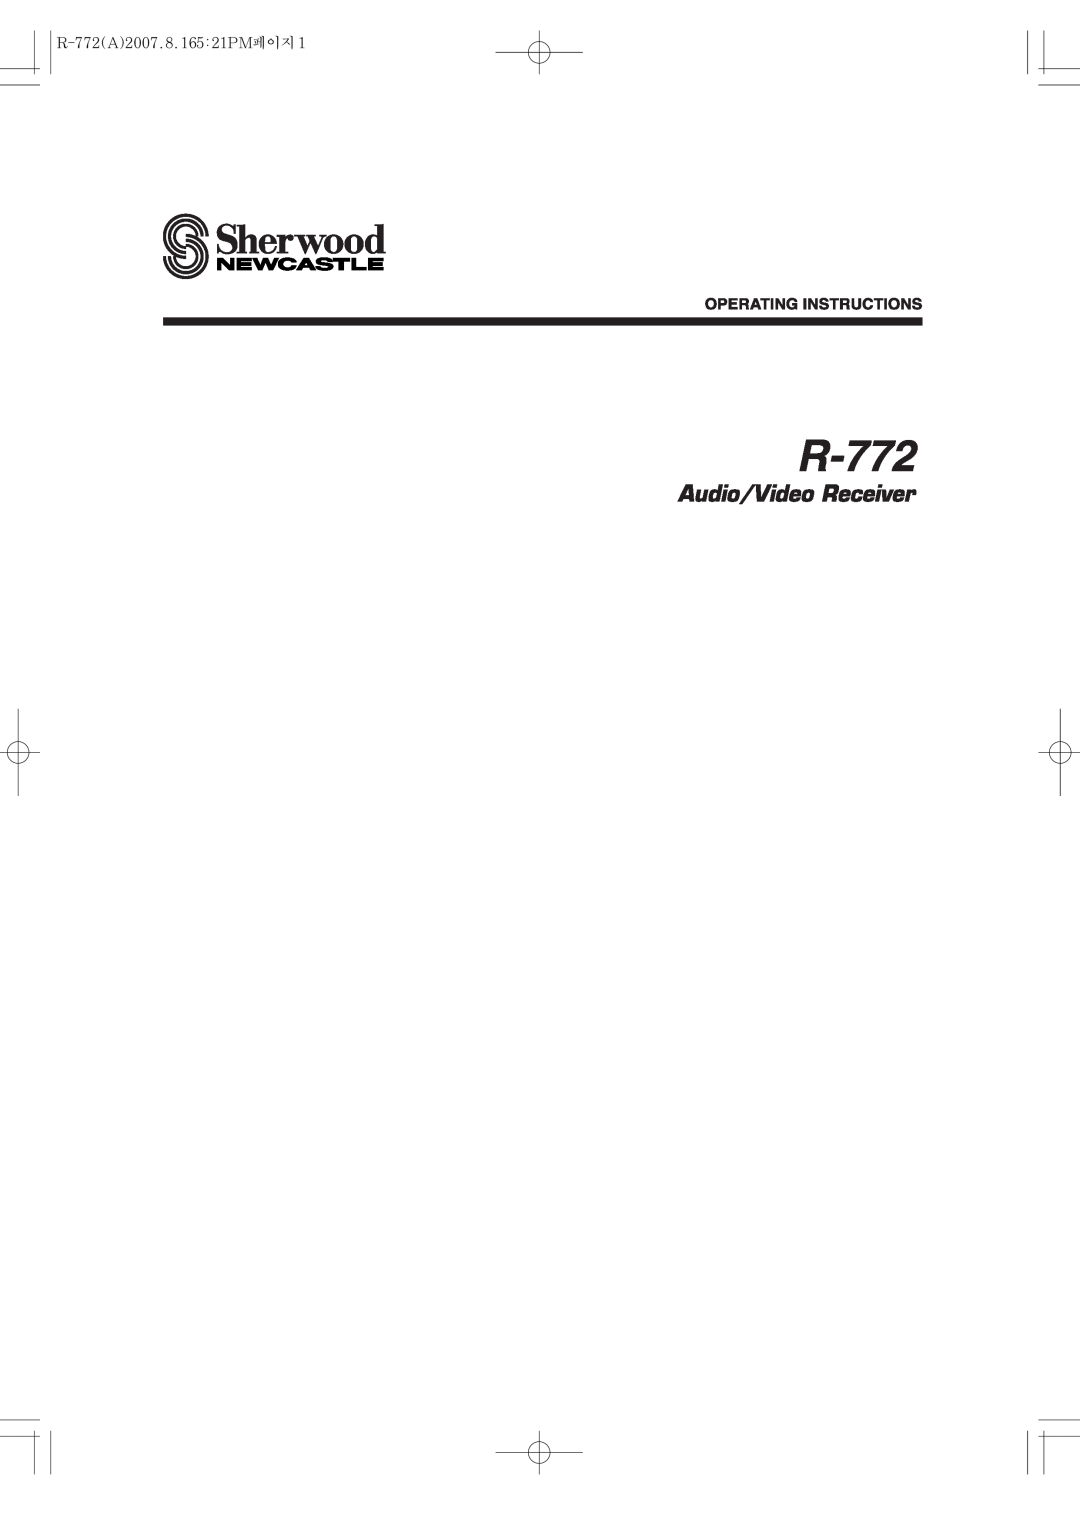 Sherwood manual R-772A2007.8.165:21PM페이지 